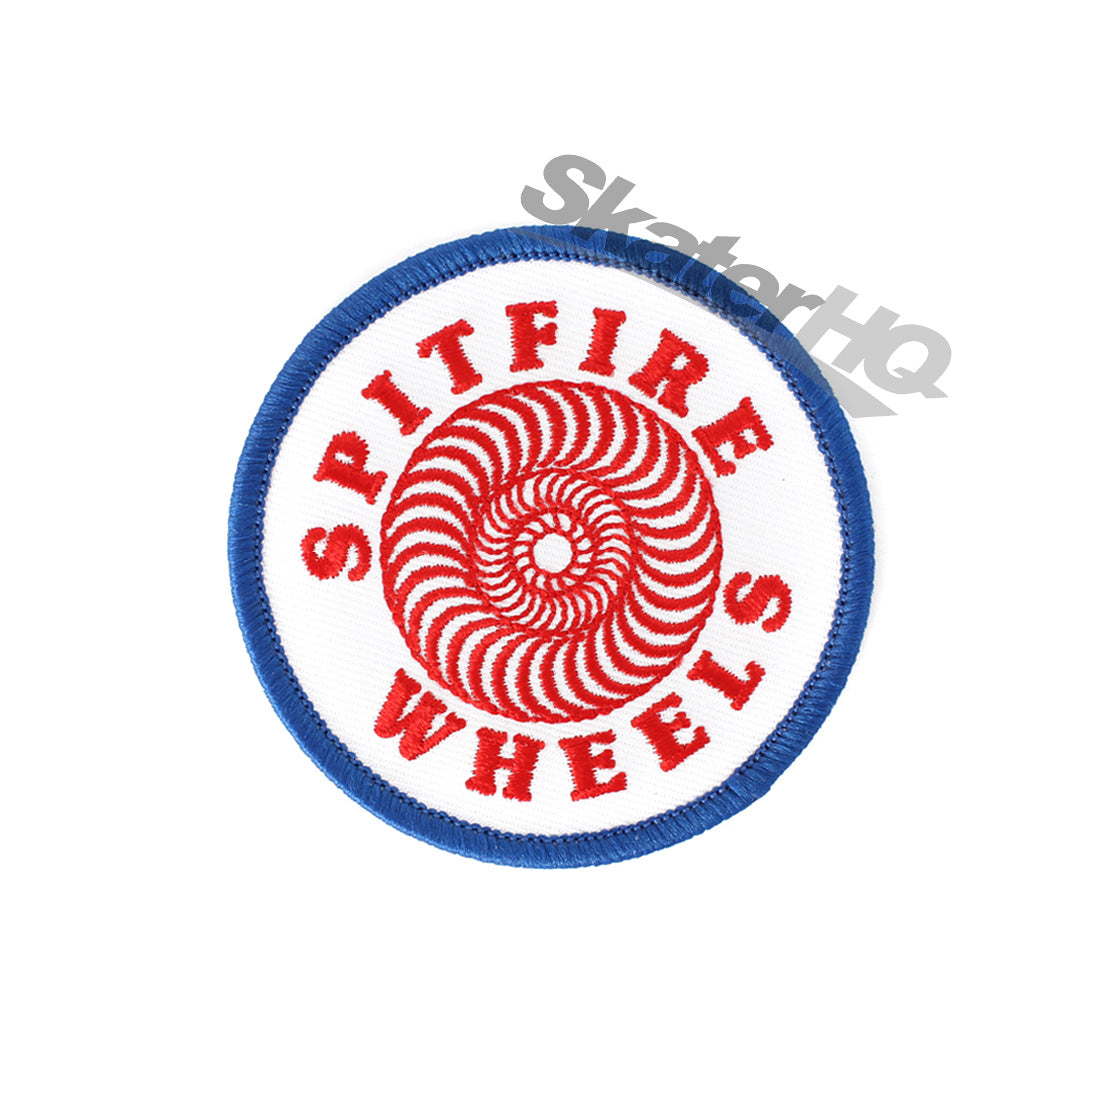 Spitfire Patch Classic Swirl Sticker - White/Blue/Red Skateboard Accessories